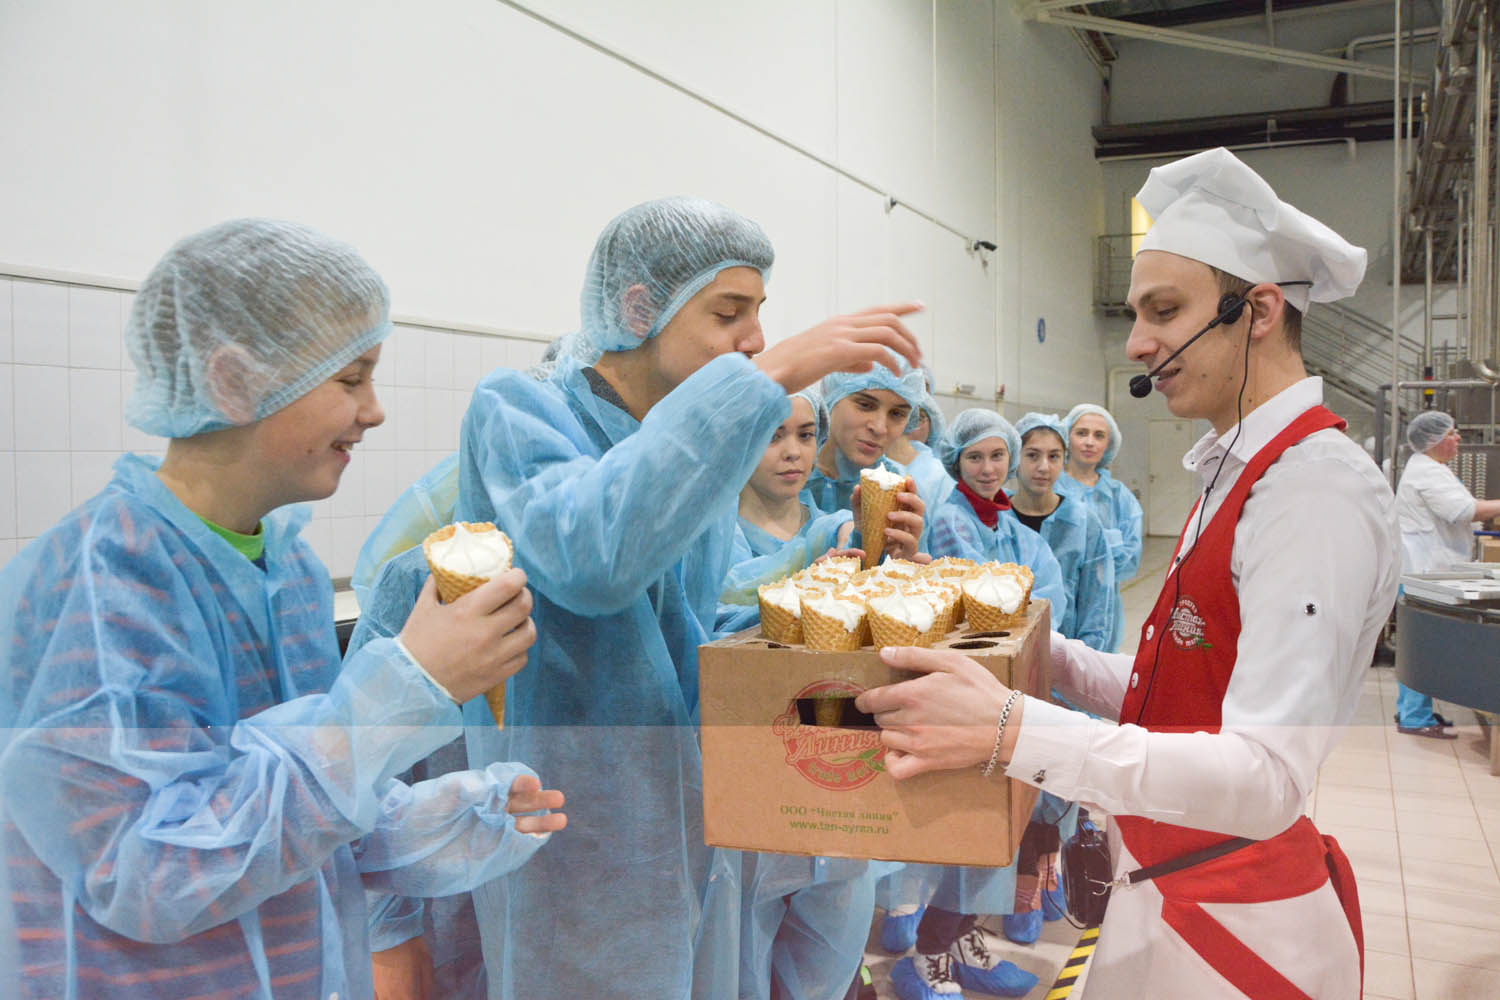 Фабрика мороженого Петрохолод Санкт-Петербург экскурсии. Фабрика мороженого экскурсия для детей. Экскурсия на завод мороженого. Фабрика мороженого в Питере экскурсия.